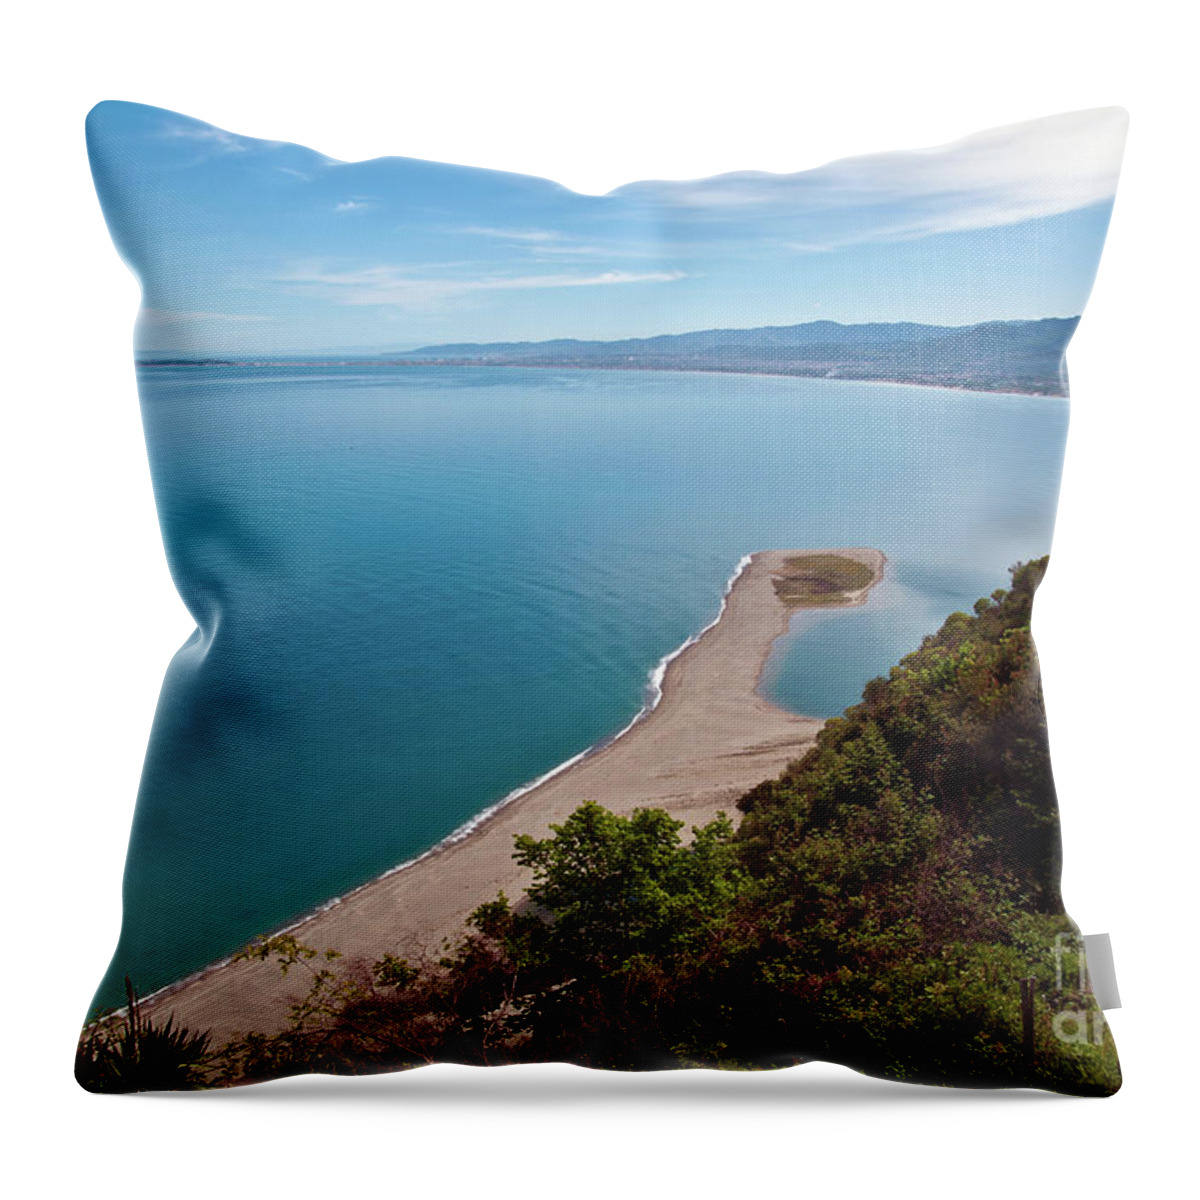 Lagoon Of Tindari Throw Pillow featuring the photograph Lagoon of Tindari on the Isle of Sicily by Silva Wischeropp